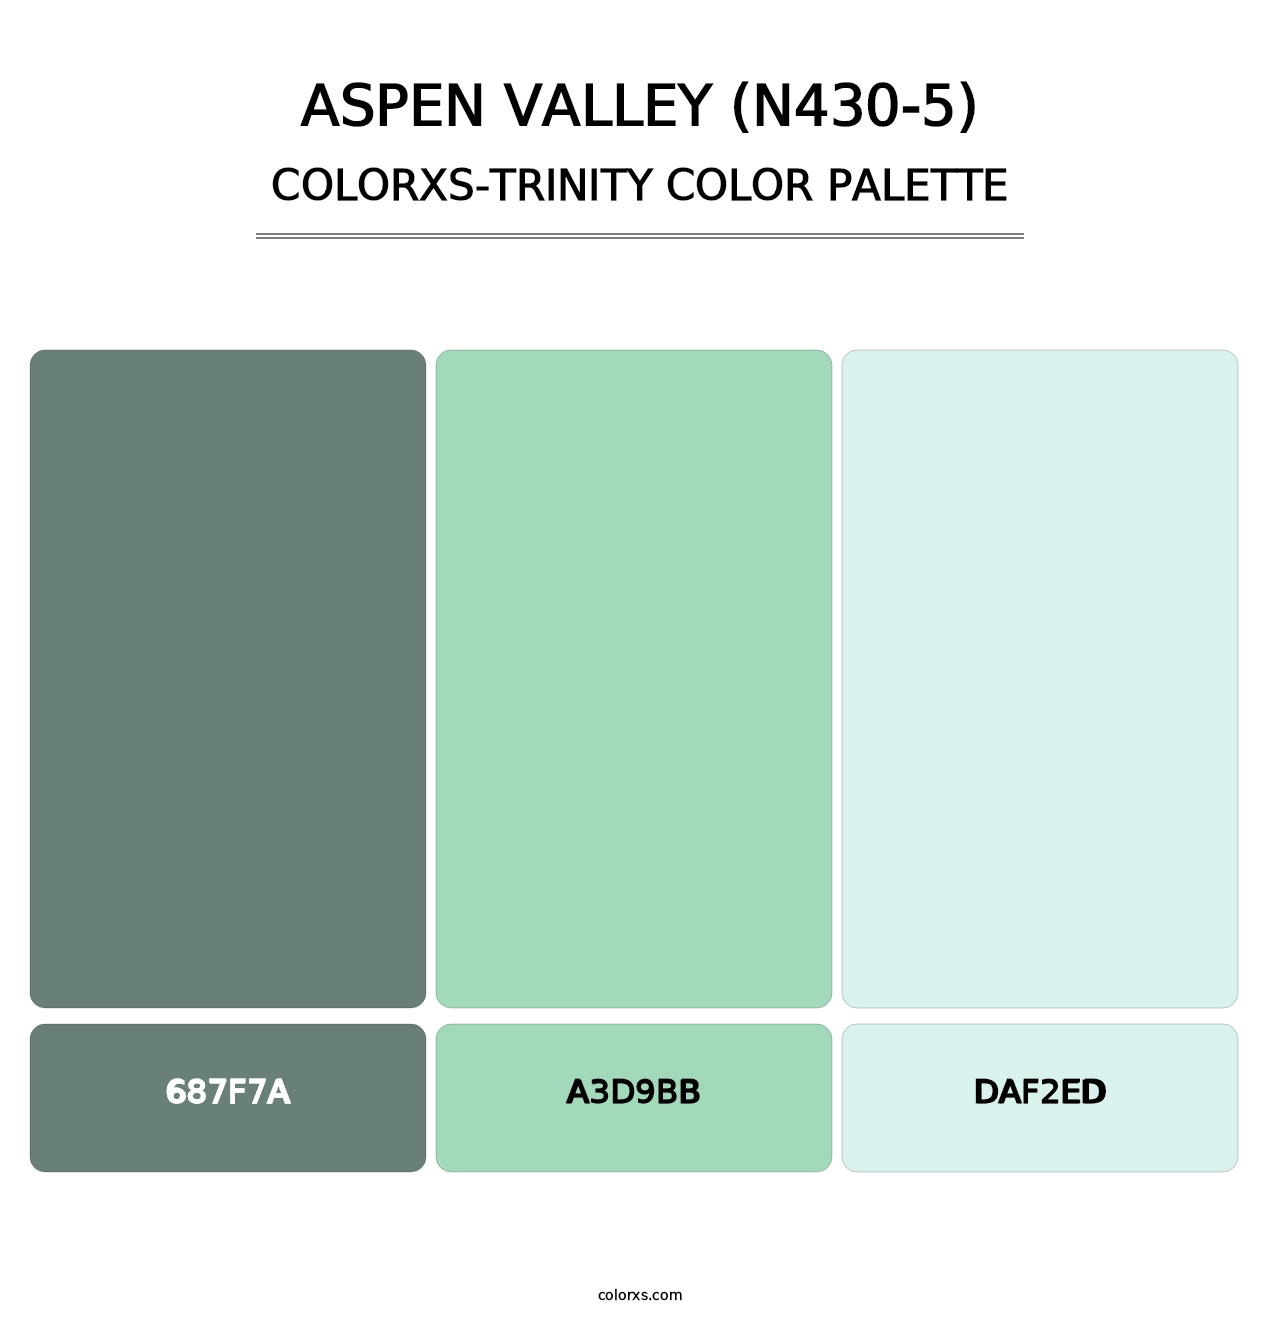 Aspen Valley (N430-5) - Colorxs Trinity Palette